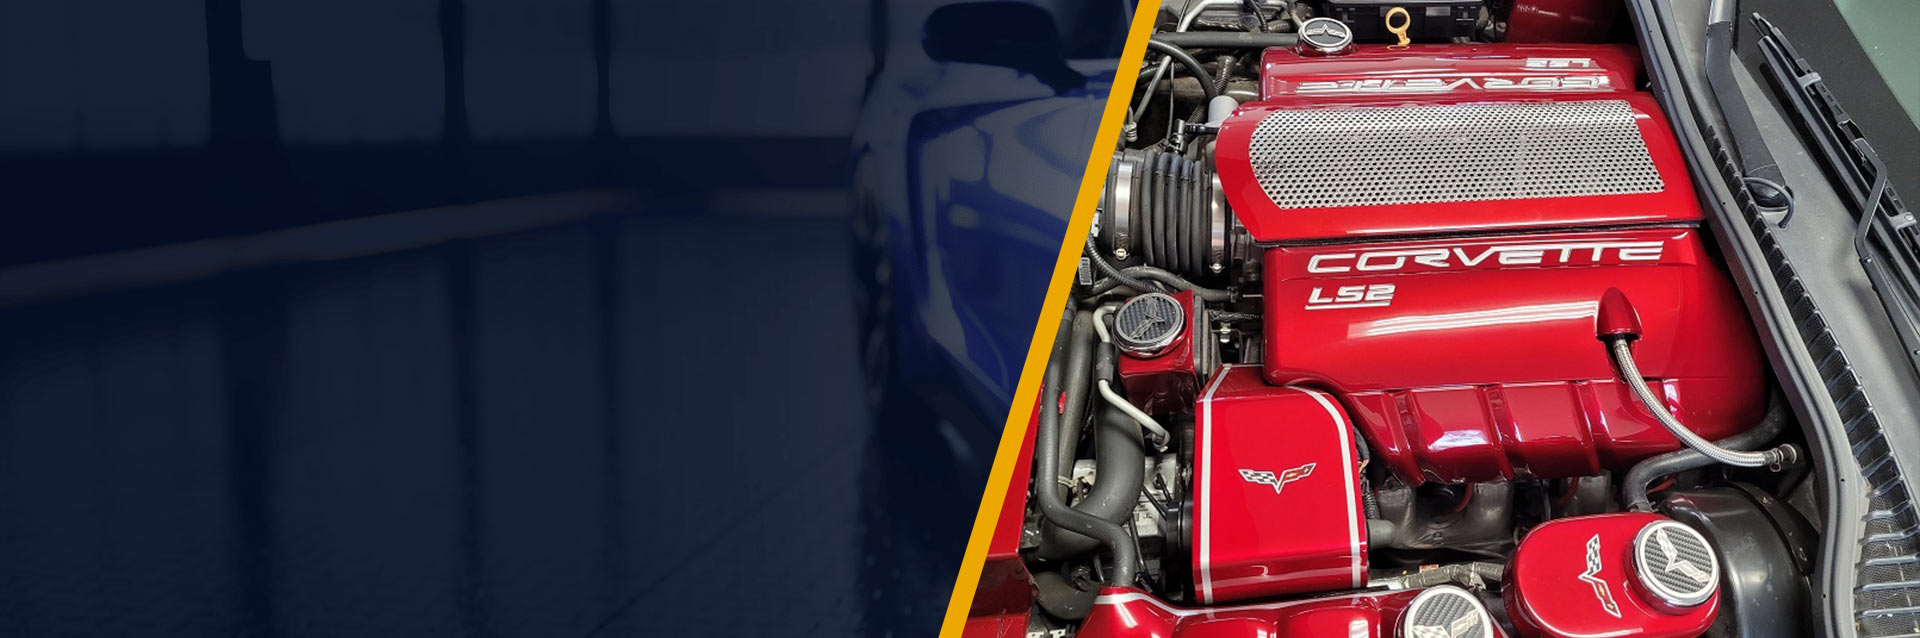 C6 Corvette Engine Bay Parts and Accessories